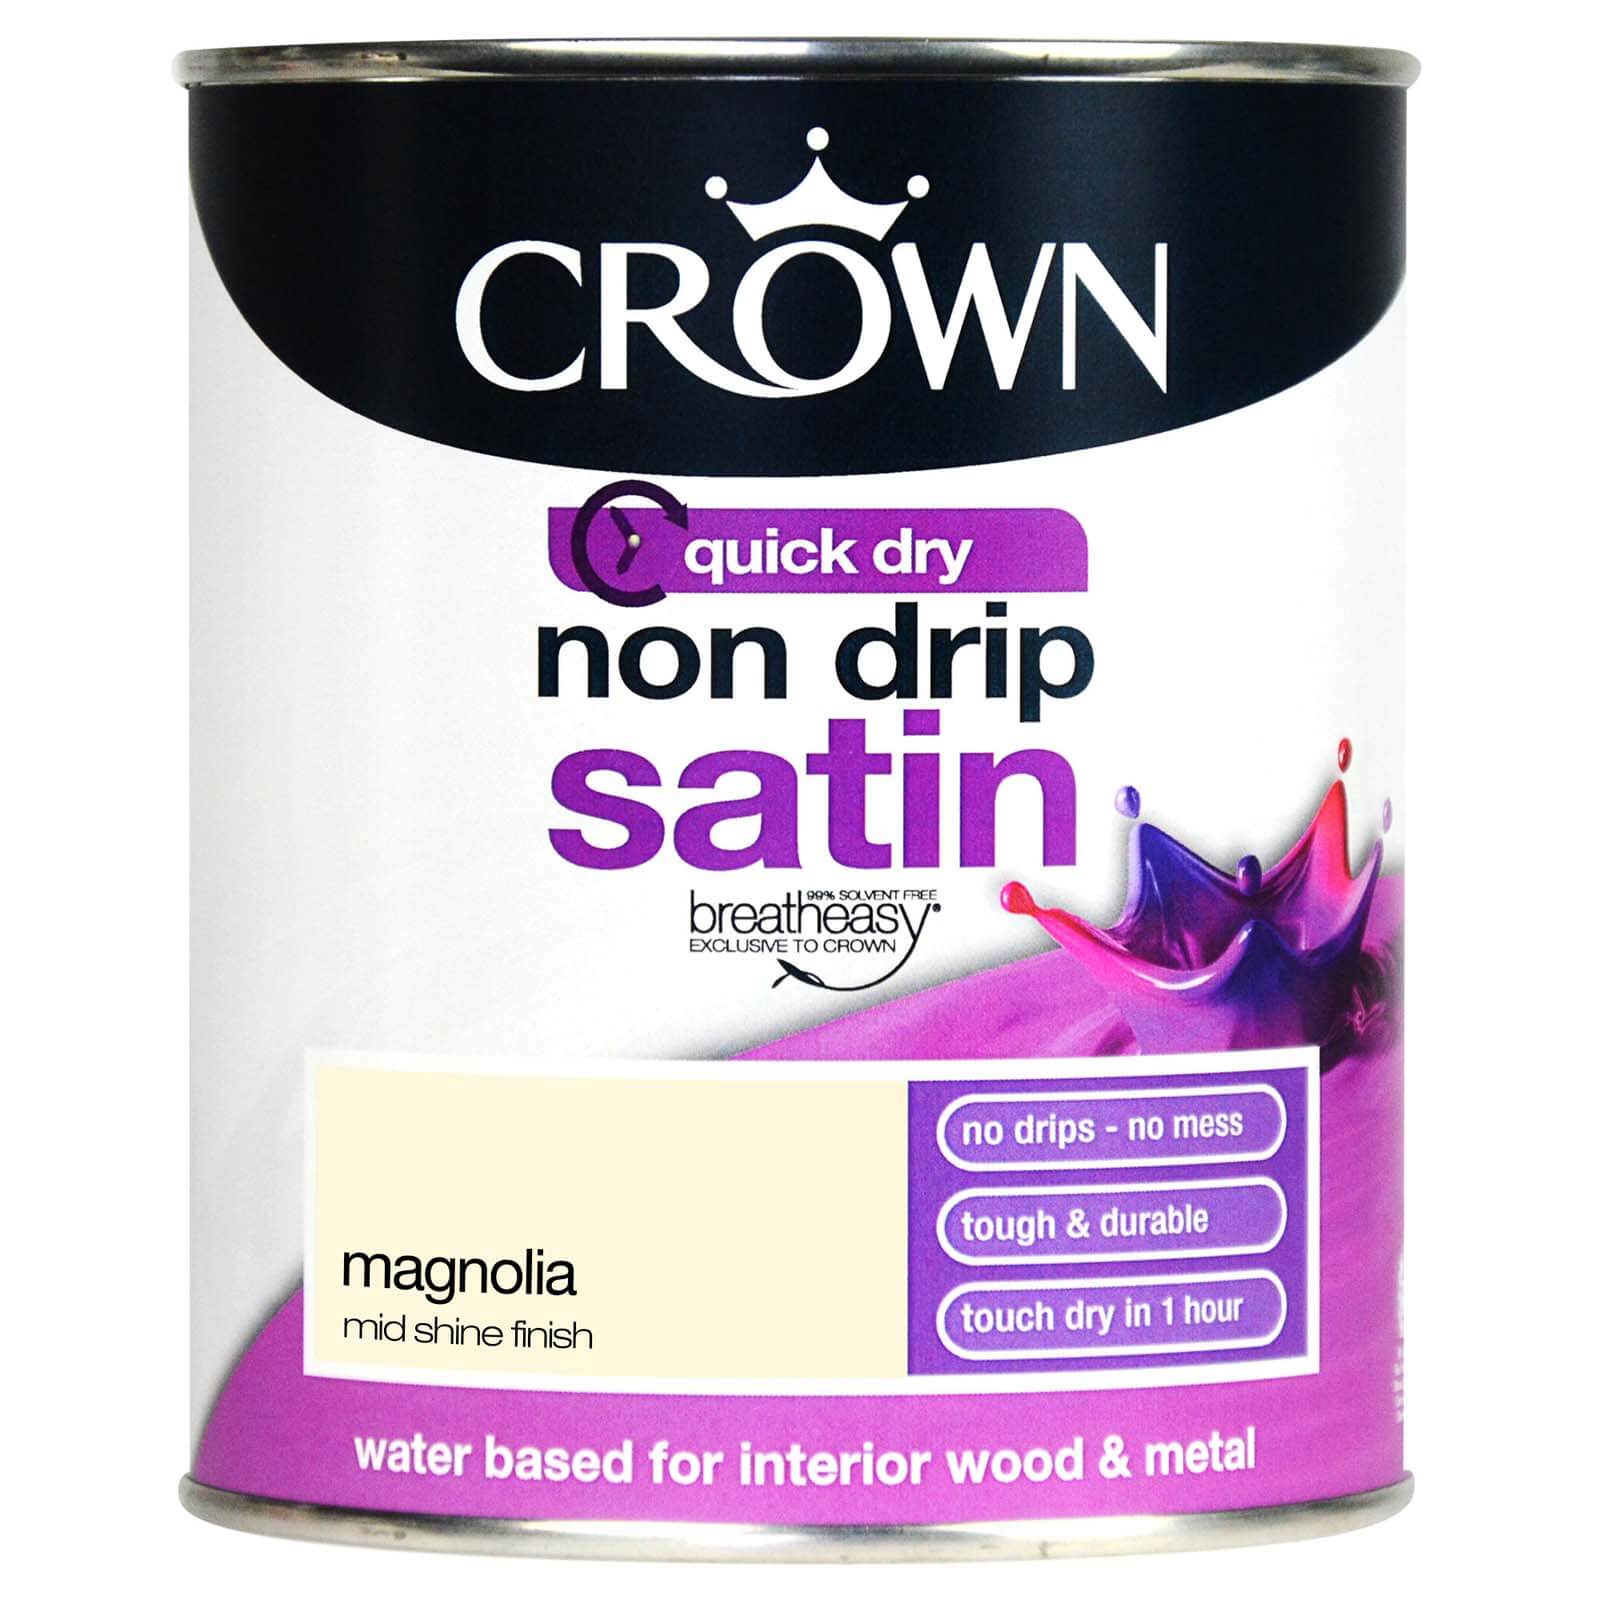 Crown Breatheasy Magnolia - Non Drip Satin Paint - 750ml